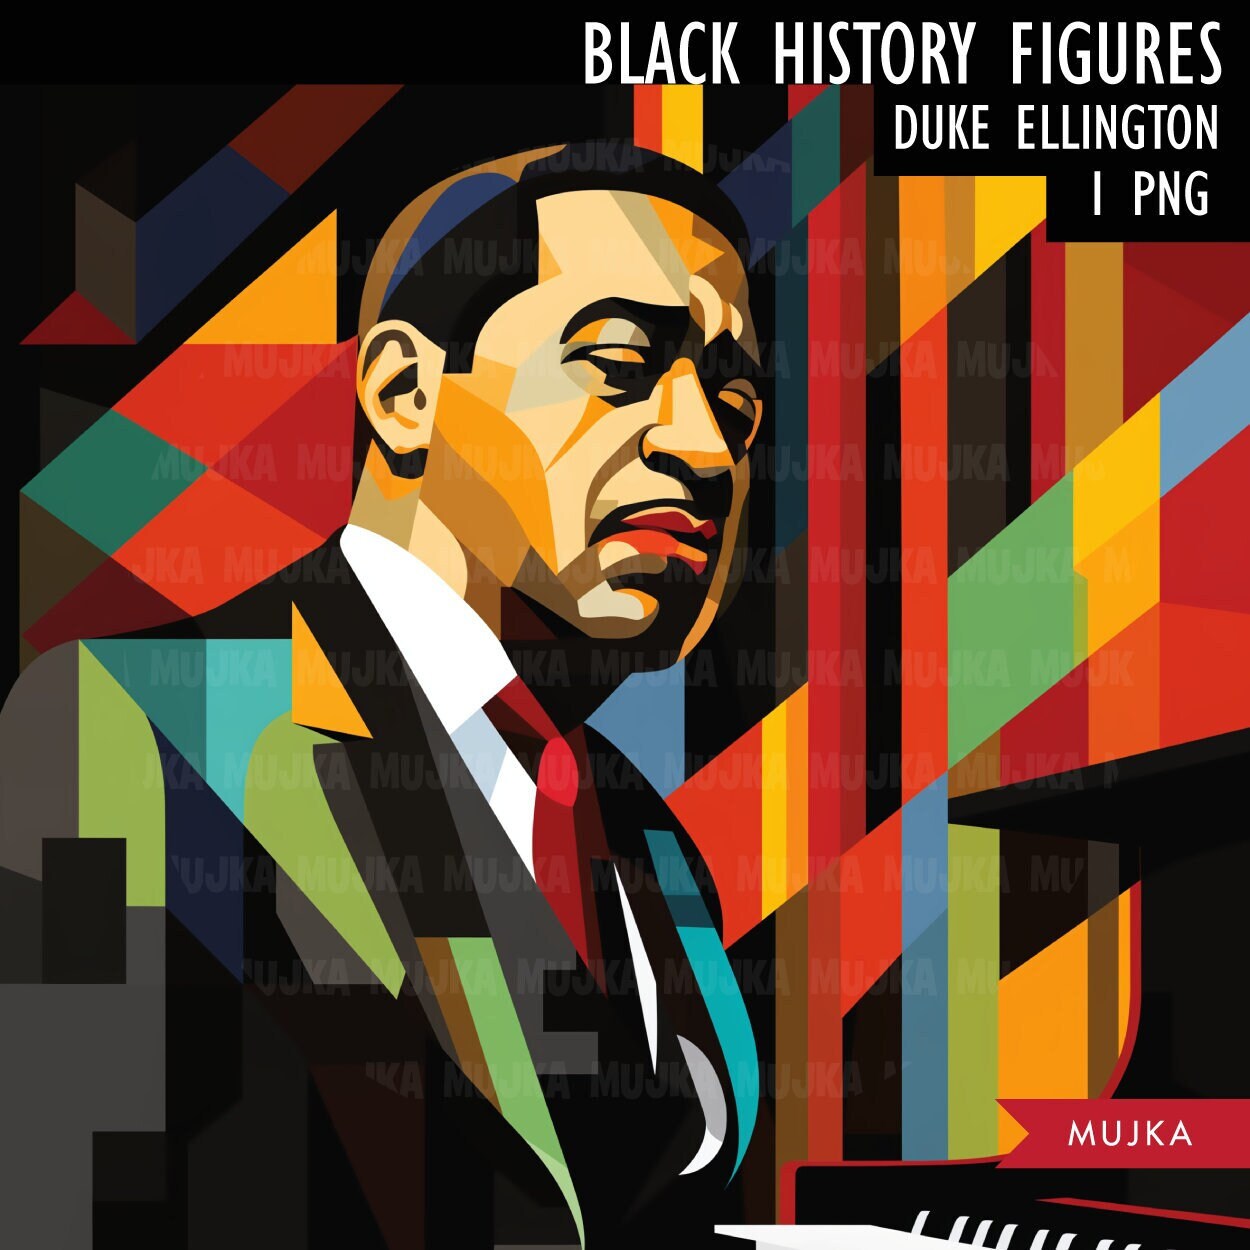 Black History PNG, Duke Ellington poster, Black History Cards, printable Black History Art, Black History wall art, sublimation design